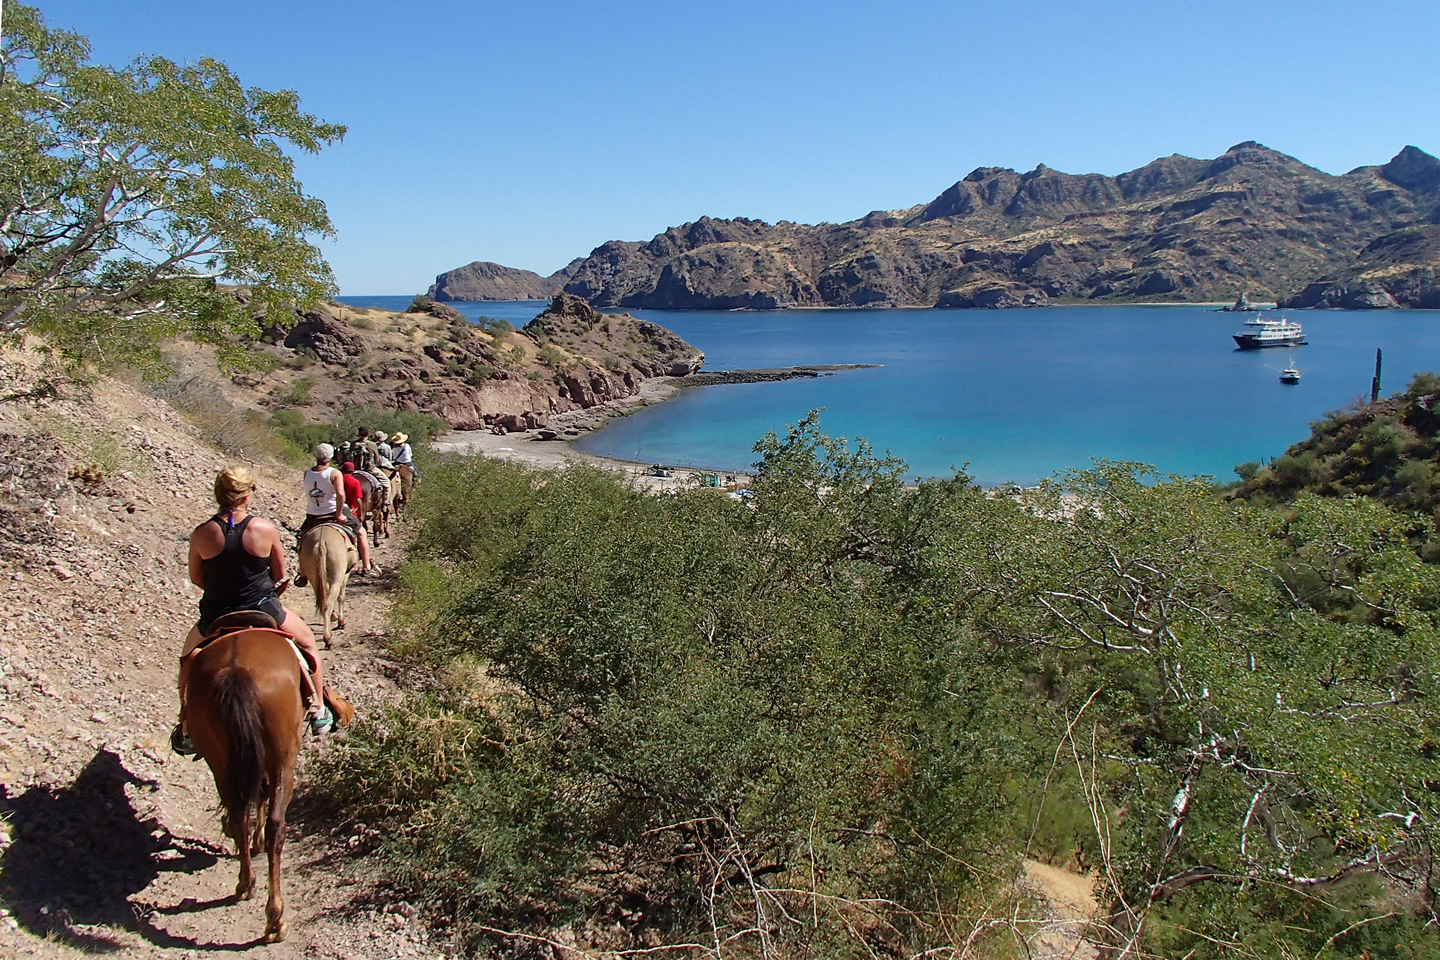 While the Safari Endeavour anchored in beautiful Bahia Agua Verde, passengers enjoyed a burro ride on mountain trails. * Photo: UnCruise Adventures